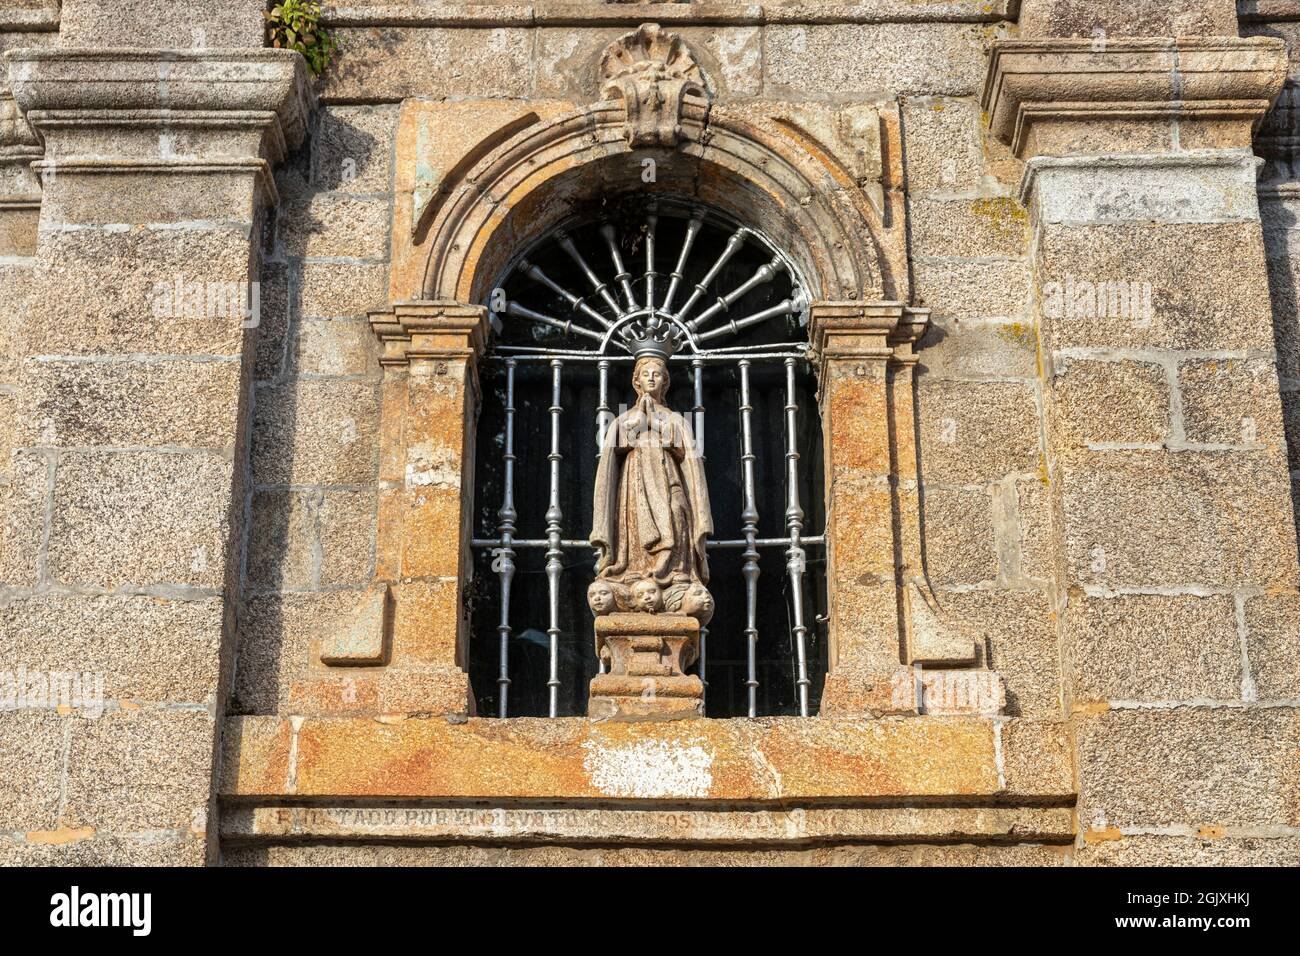 Santiago de Compostela, Spanien. Statue unserer Lieben Frau vom Berg Karmel Kapelle von O Carme de Abaixo (niedriger Karmel), eine Kirche in der Nähe des Flusses Sarela Stockfoto